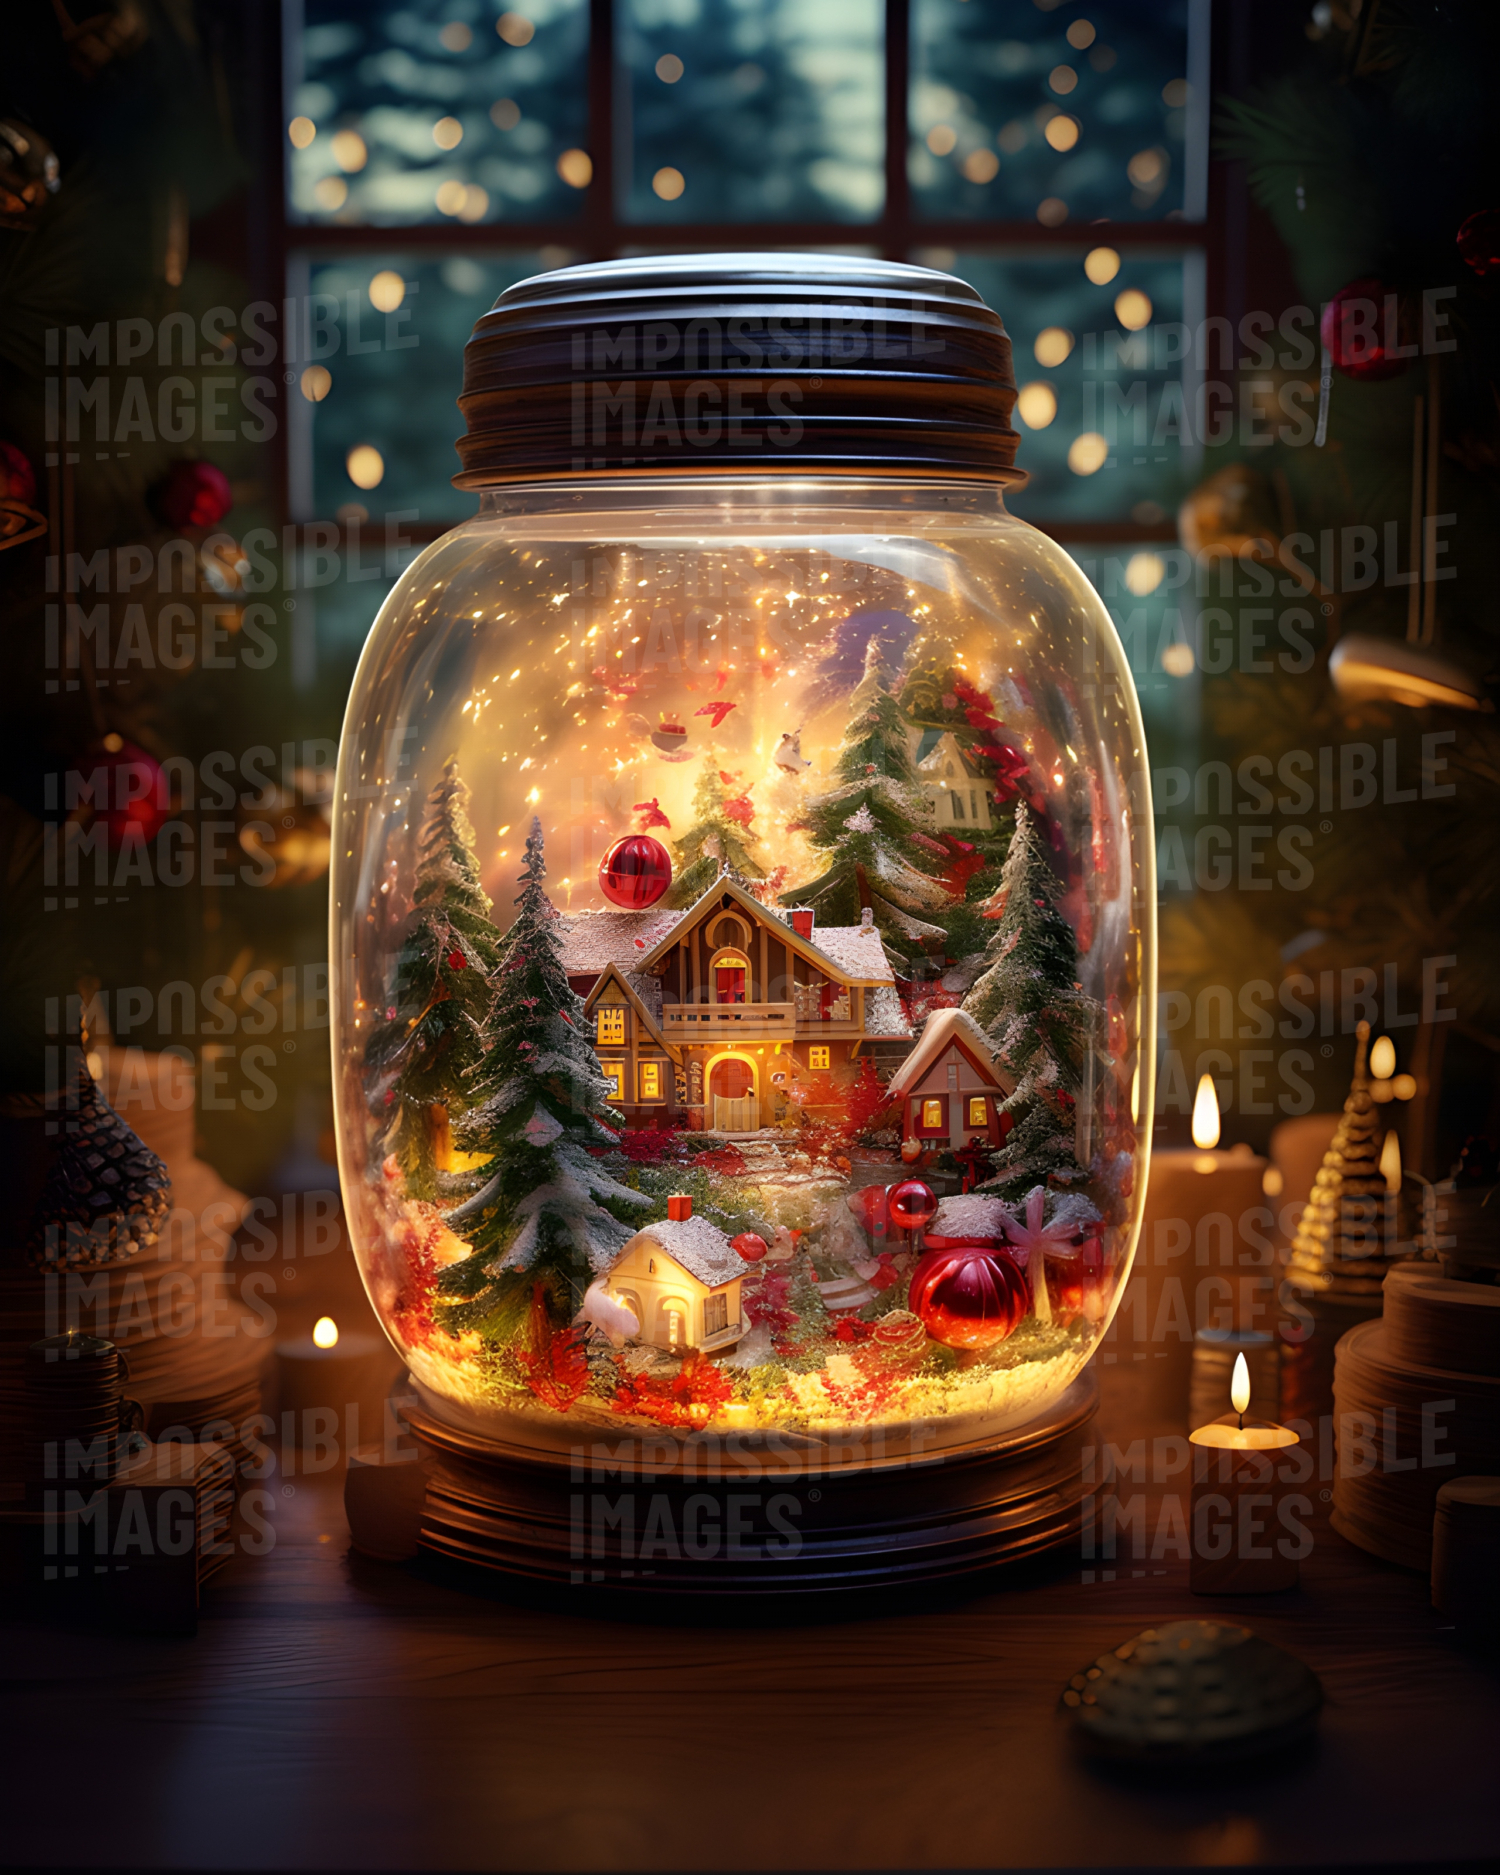 Christmas scene in a jam jar